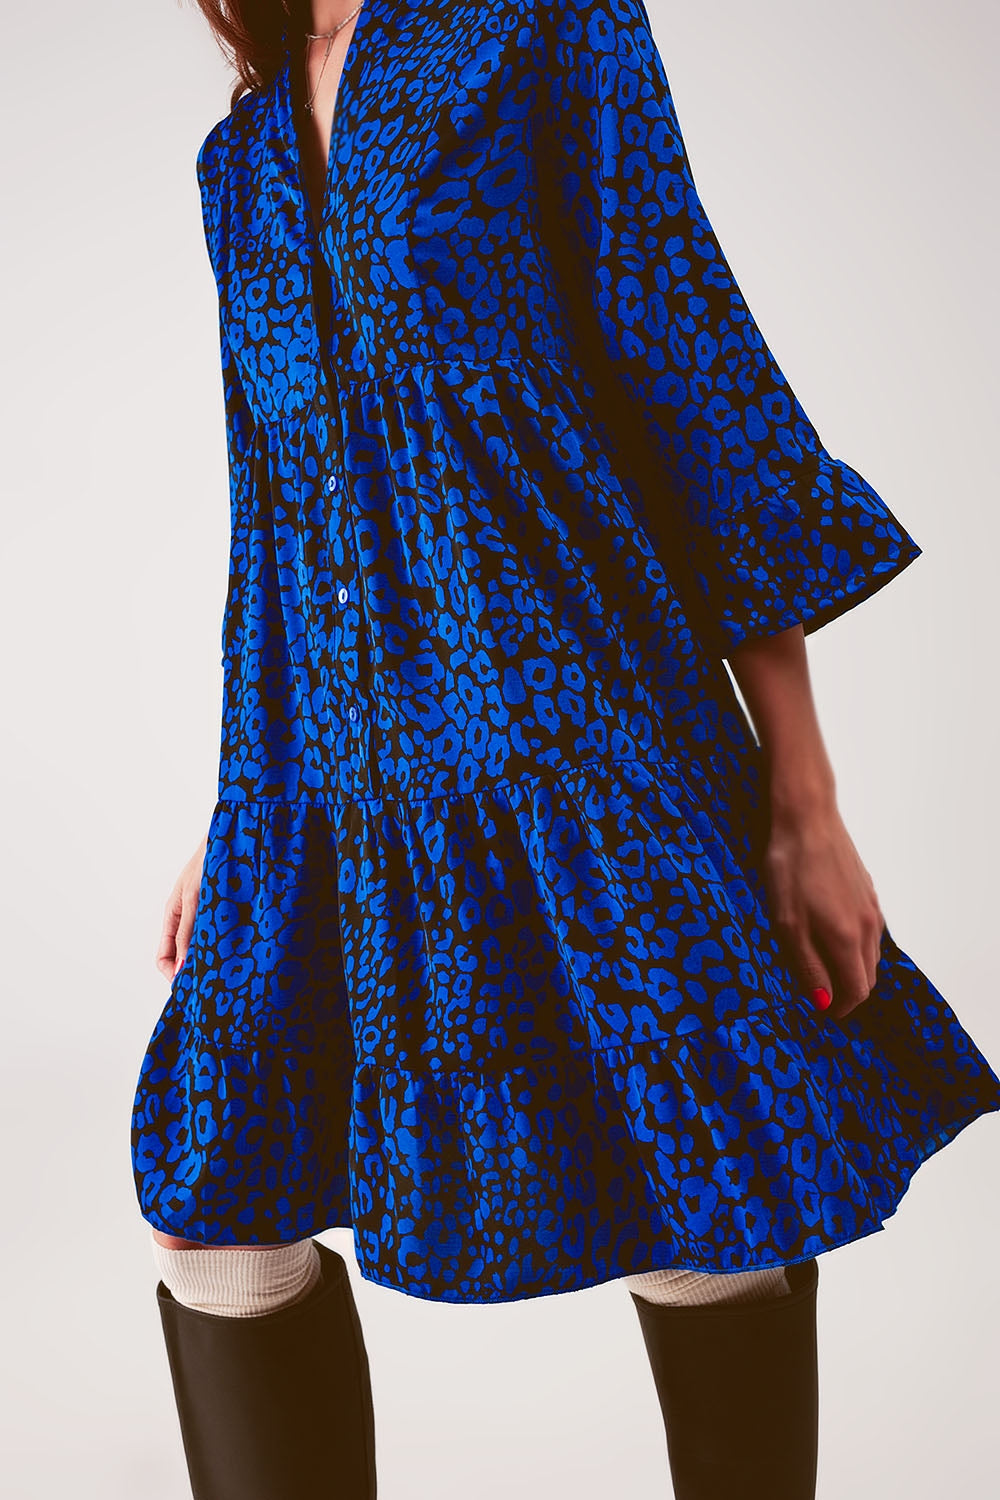 Tiered Smock Mini Dress in Blue Animal Print